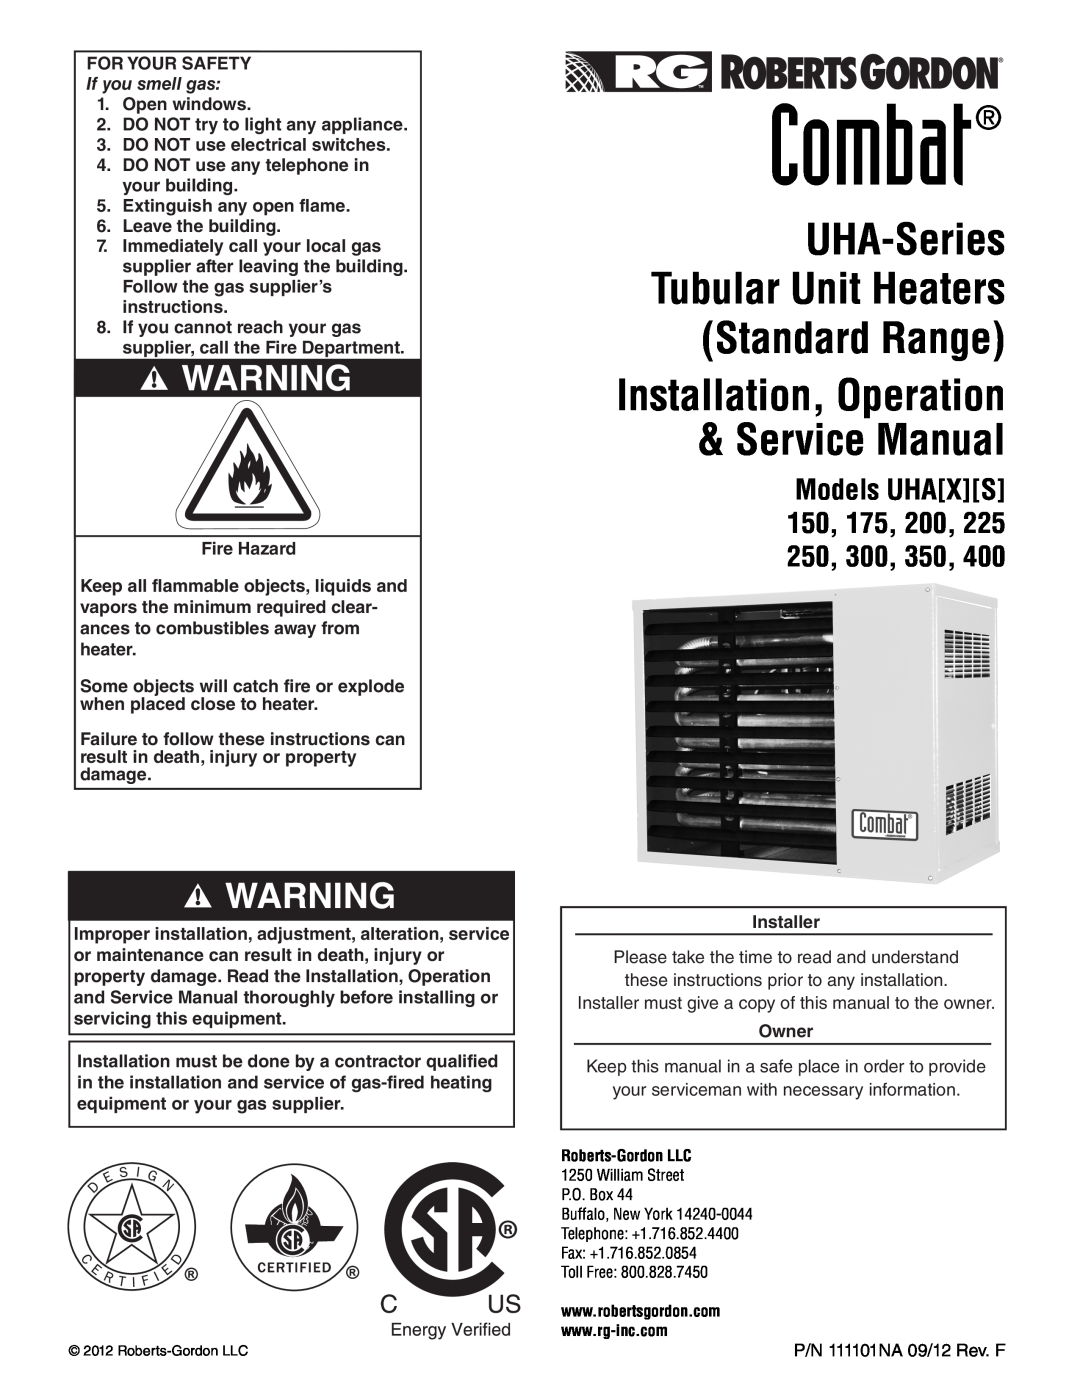 Roberts Gorden 350, 200, 150, 400 service manual Combat, UHA-Series Tubular Unit Heaters Standard Range, If you smell gas 